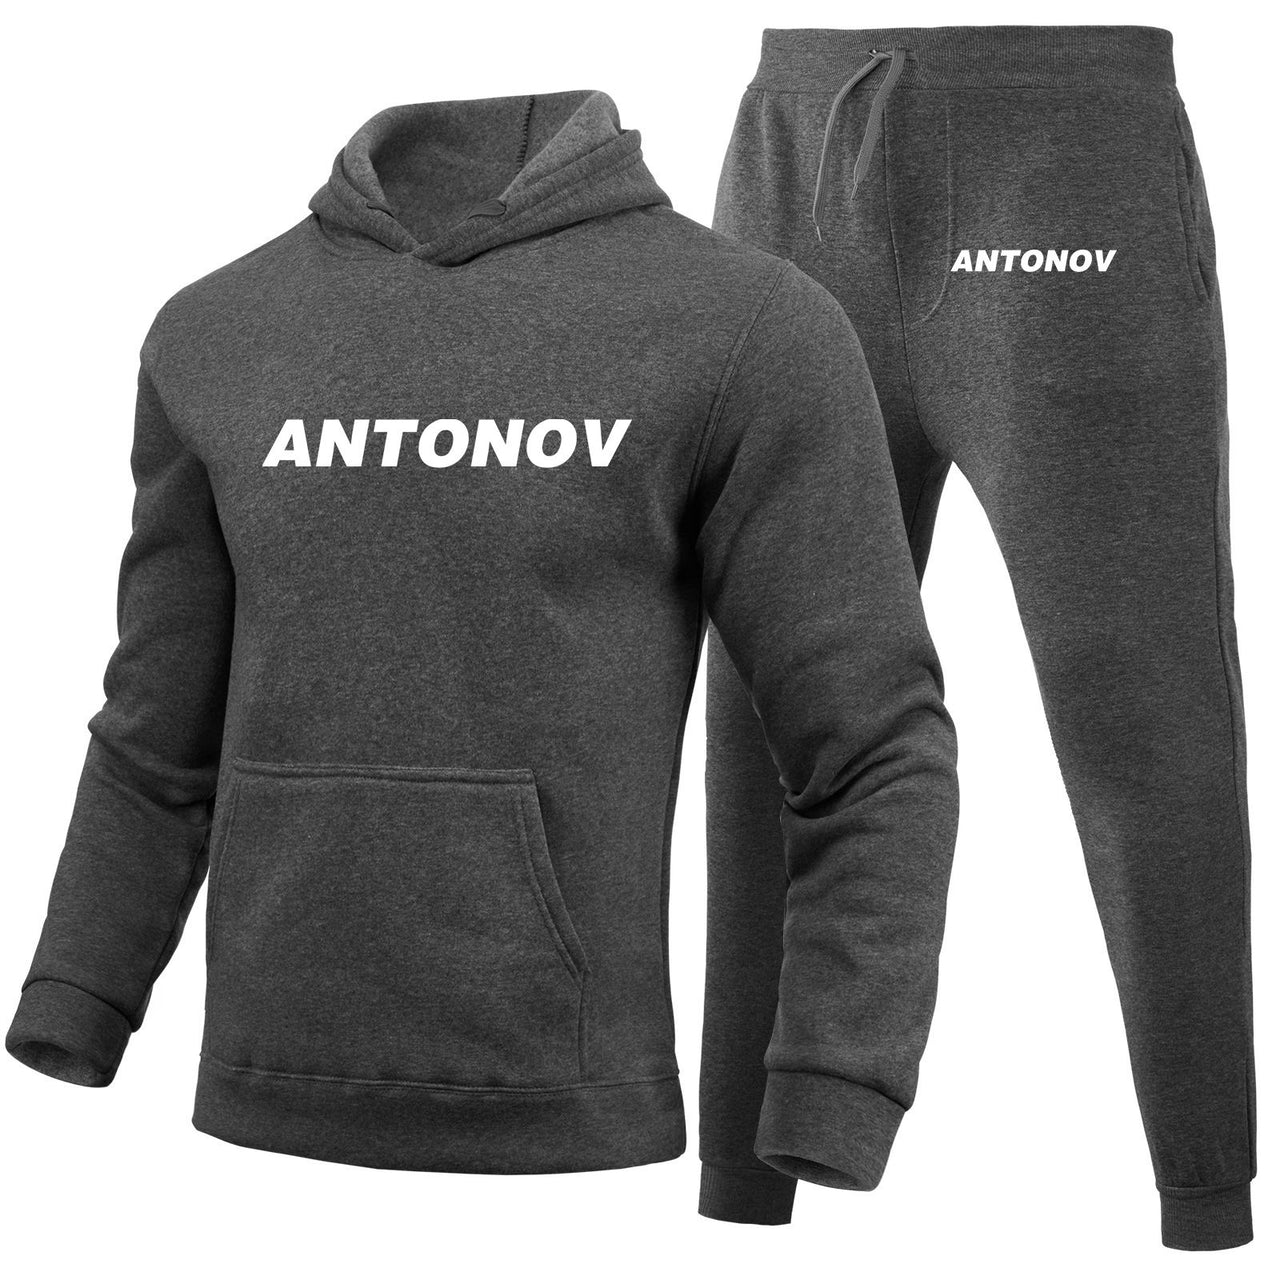 Antonov & Text Designed Hoodies & Sweatpants Set